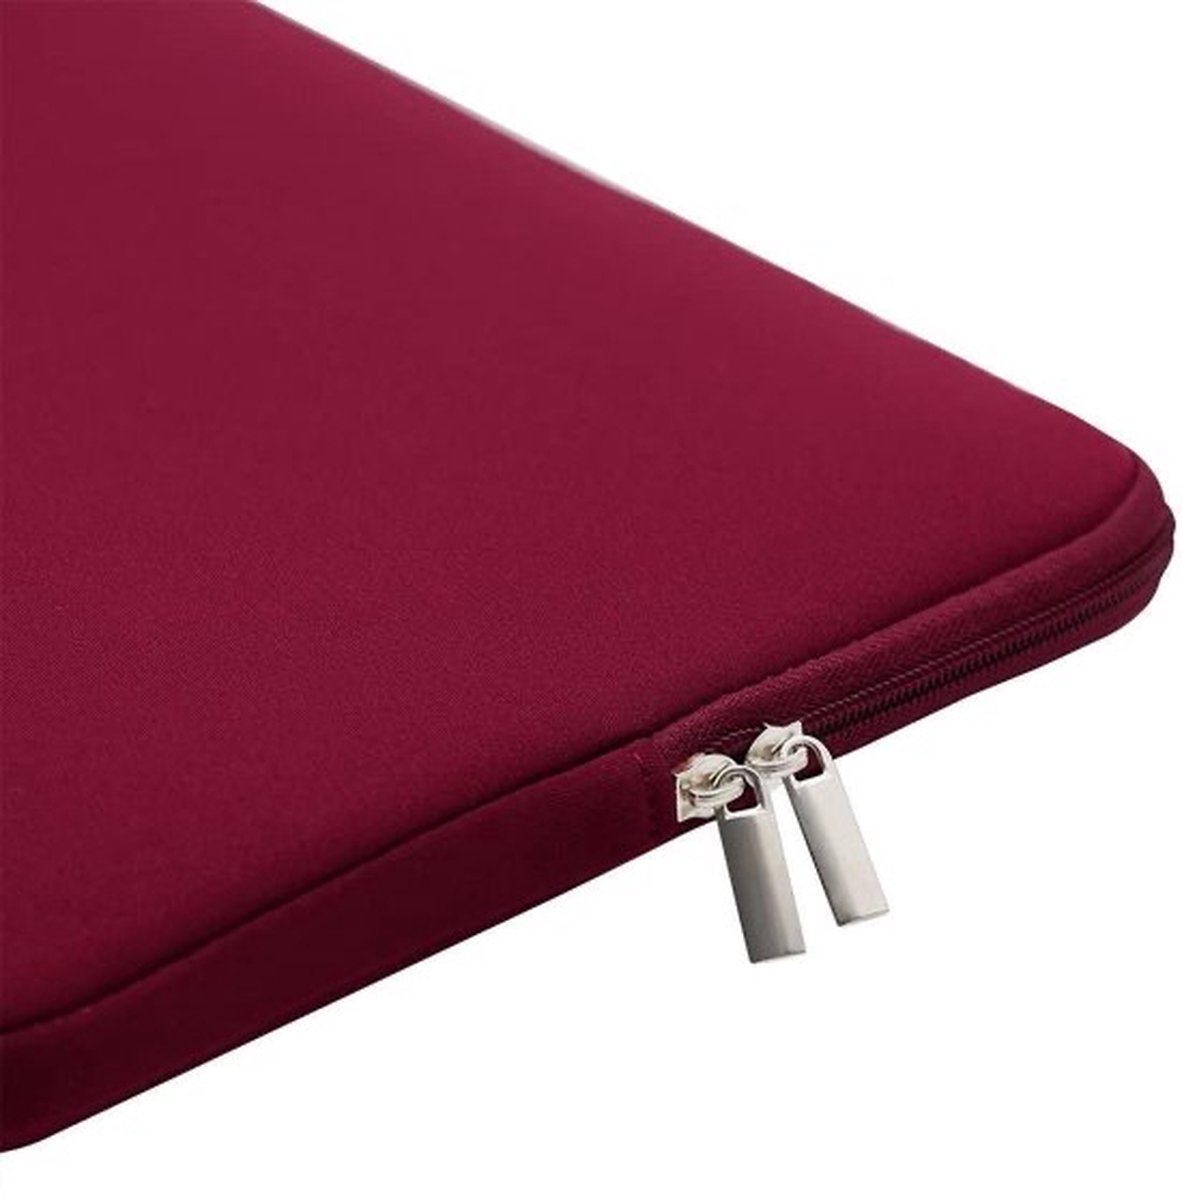 Waterdichte laptopsleeve - Soft Touch - Laptophoes - 11,6 inch - Extra bescherming ( bordeaux rood )